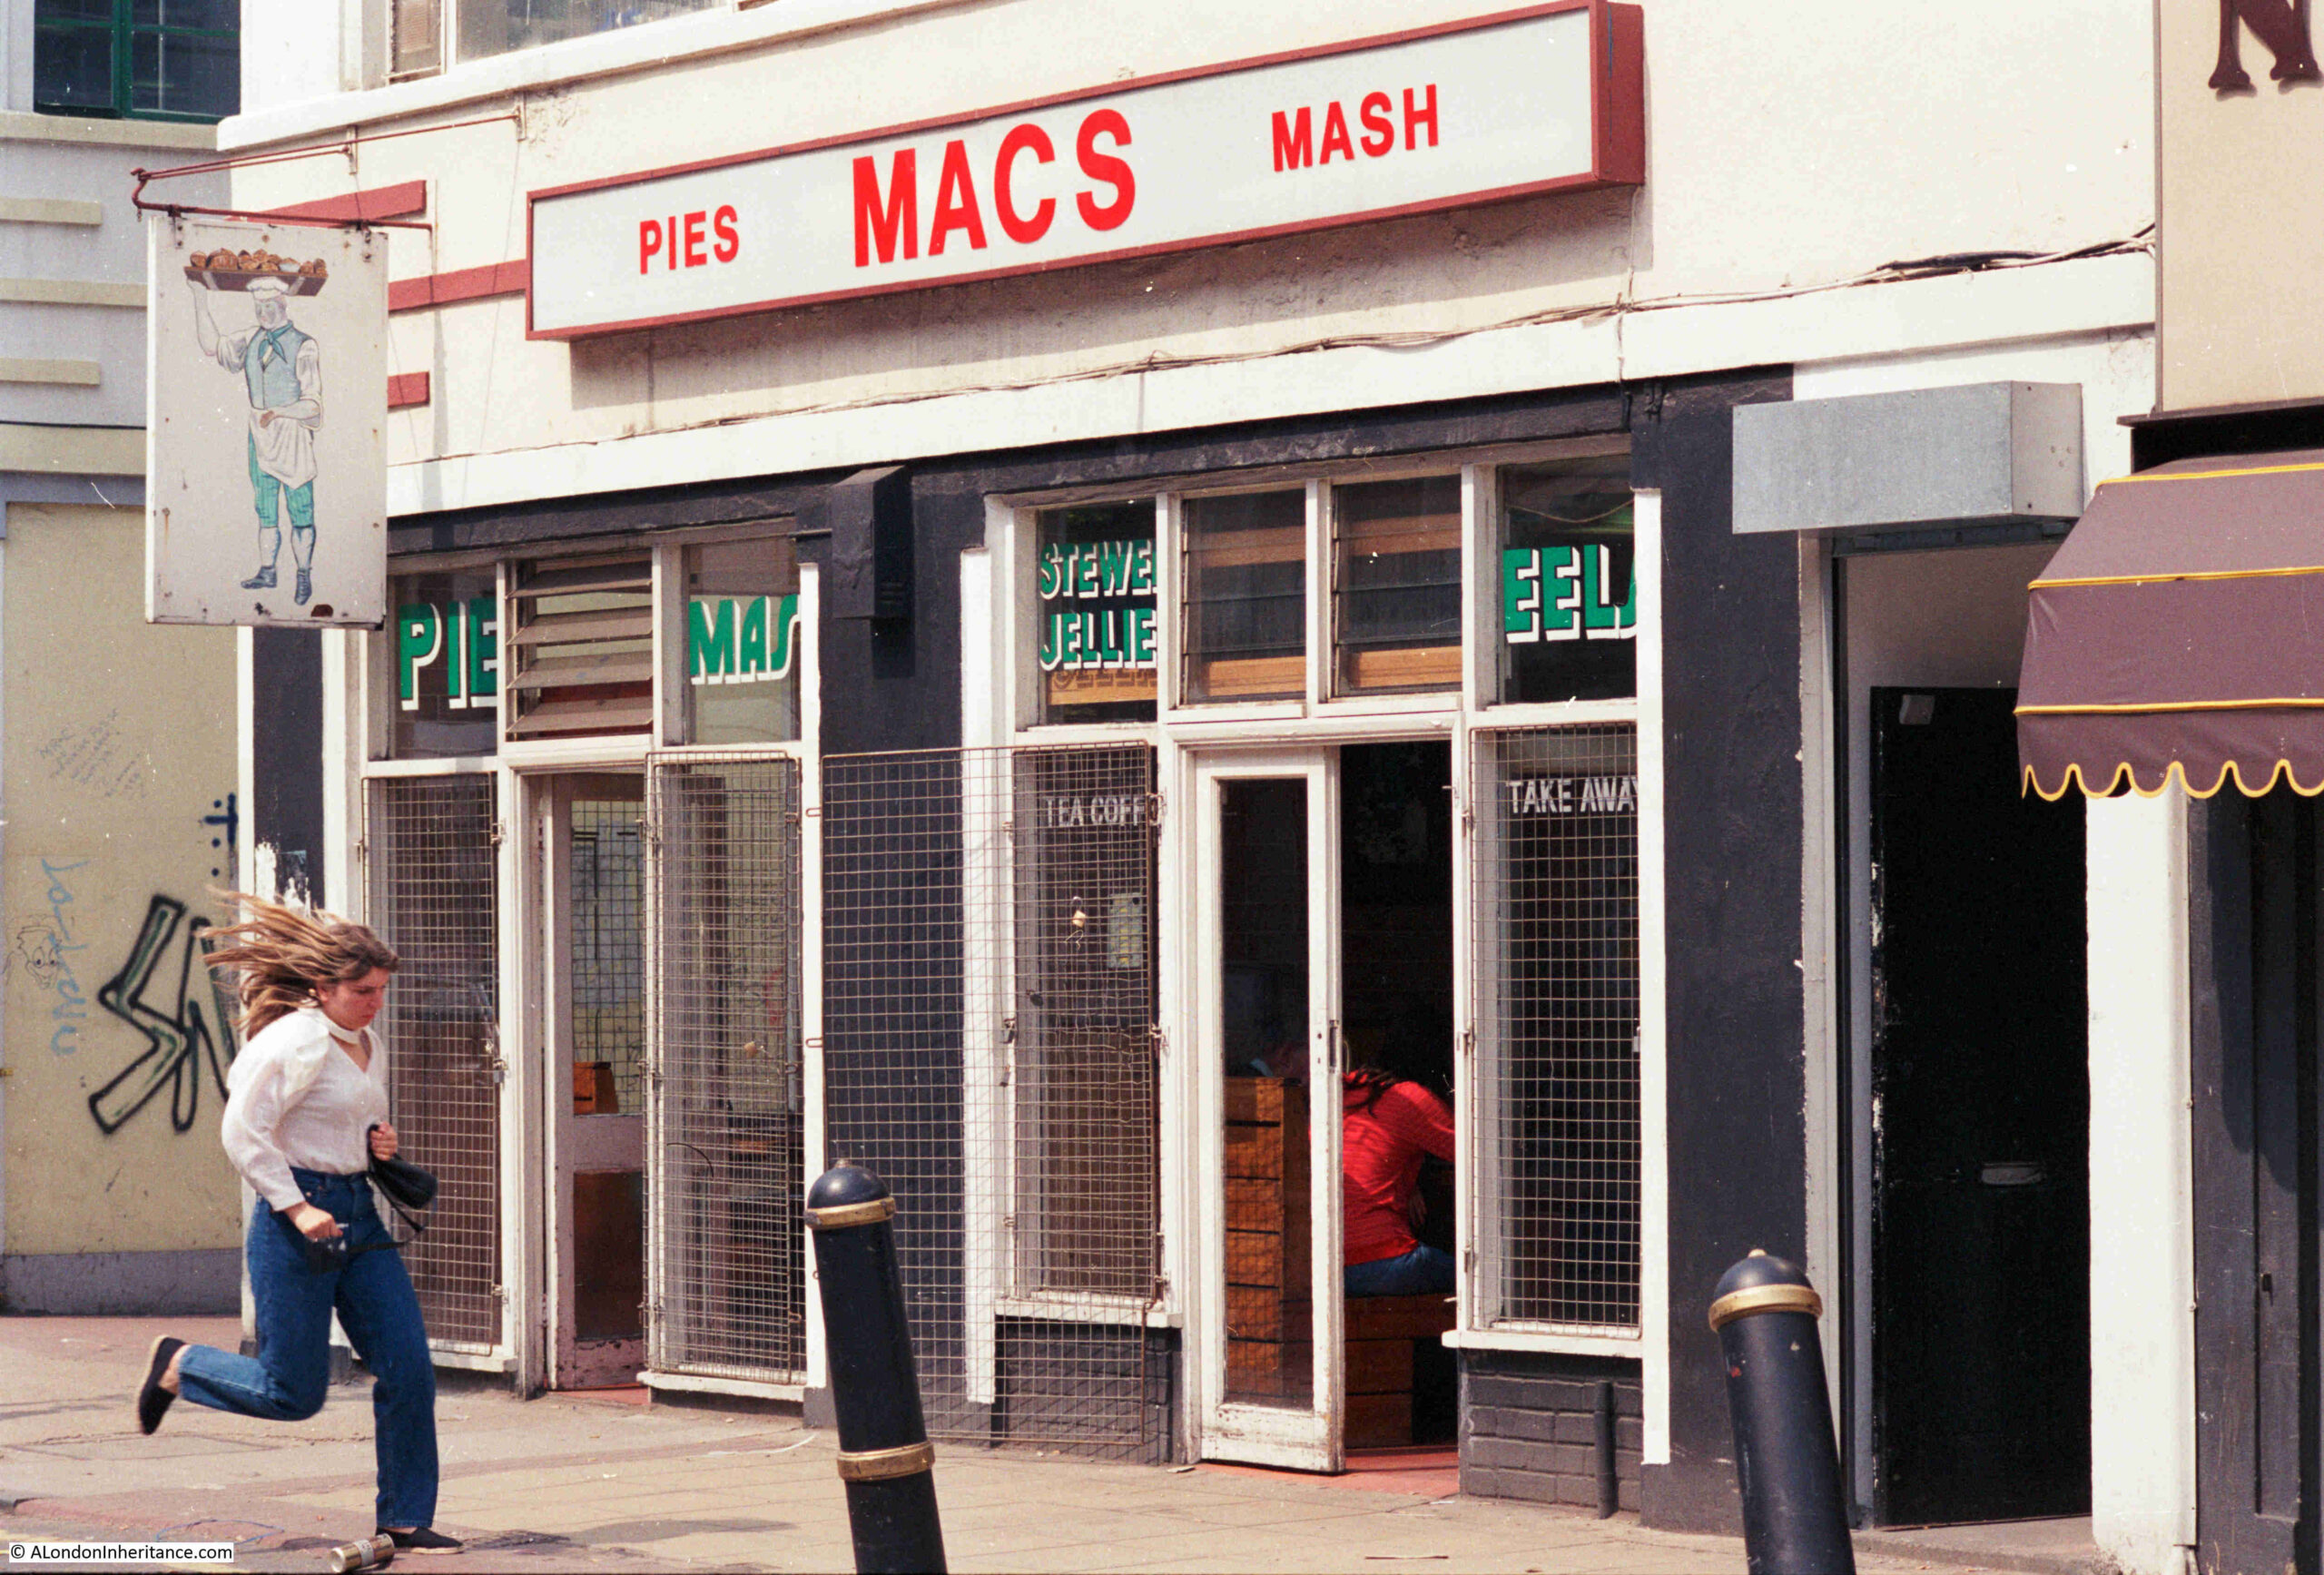 Macs Pie and Mash shop